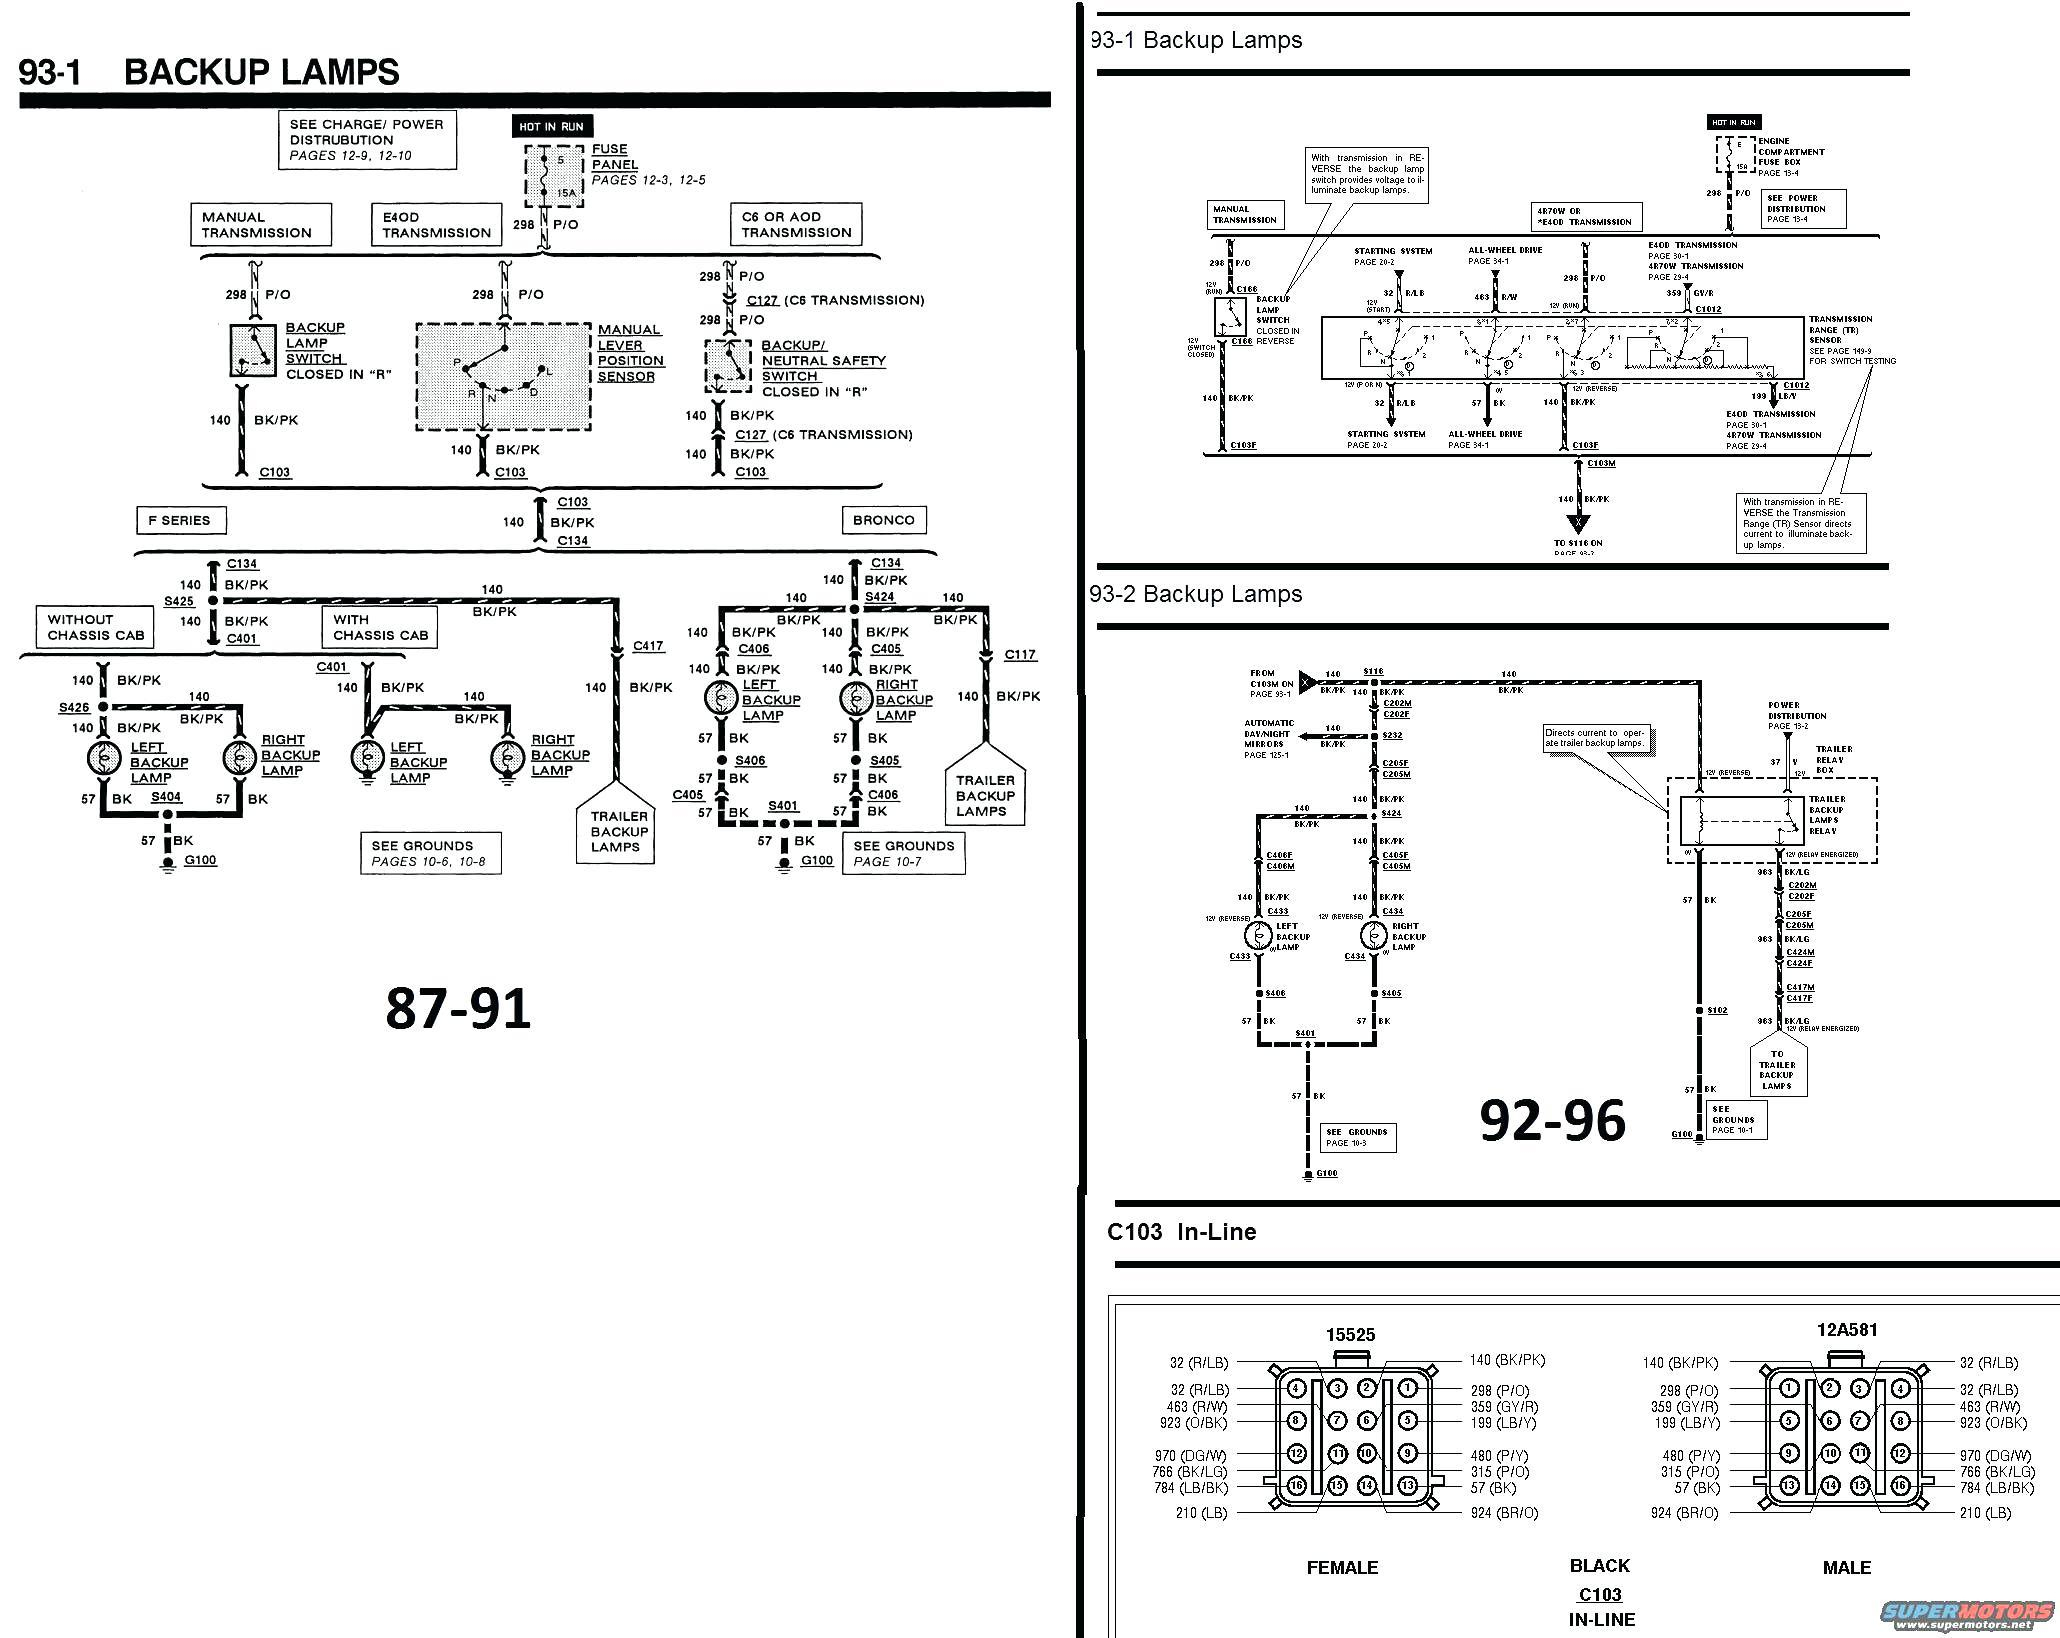 Yamaha Outboard Wiring Diagram Pdf | Wiring Diagram - Yamaha Outboard Wiring Diagram Pdf